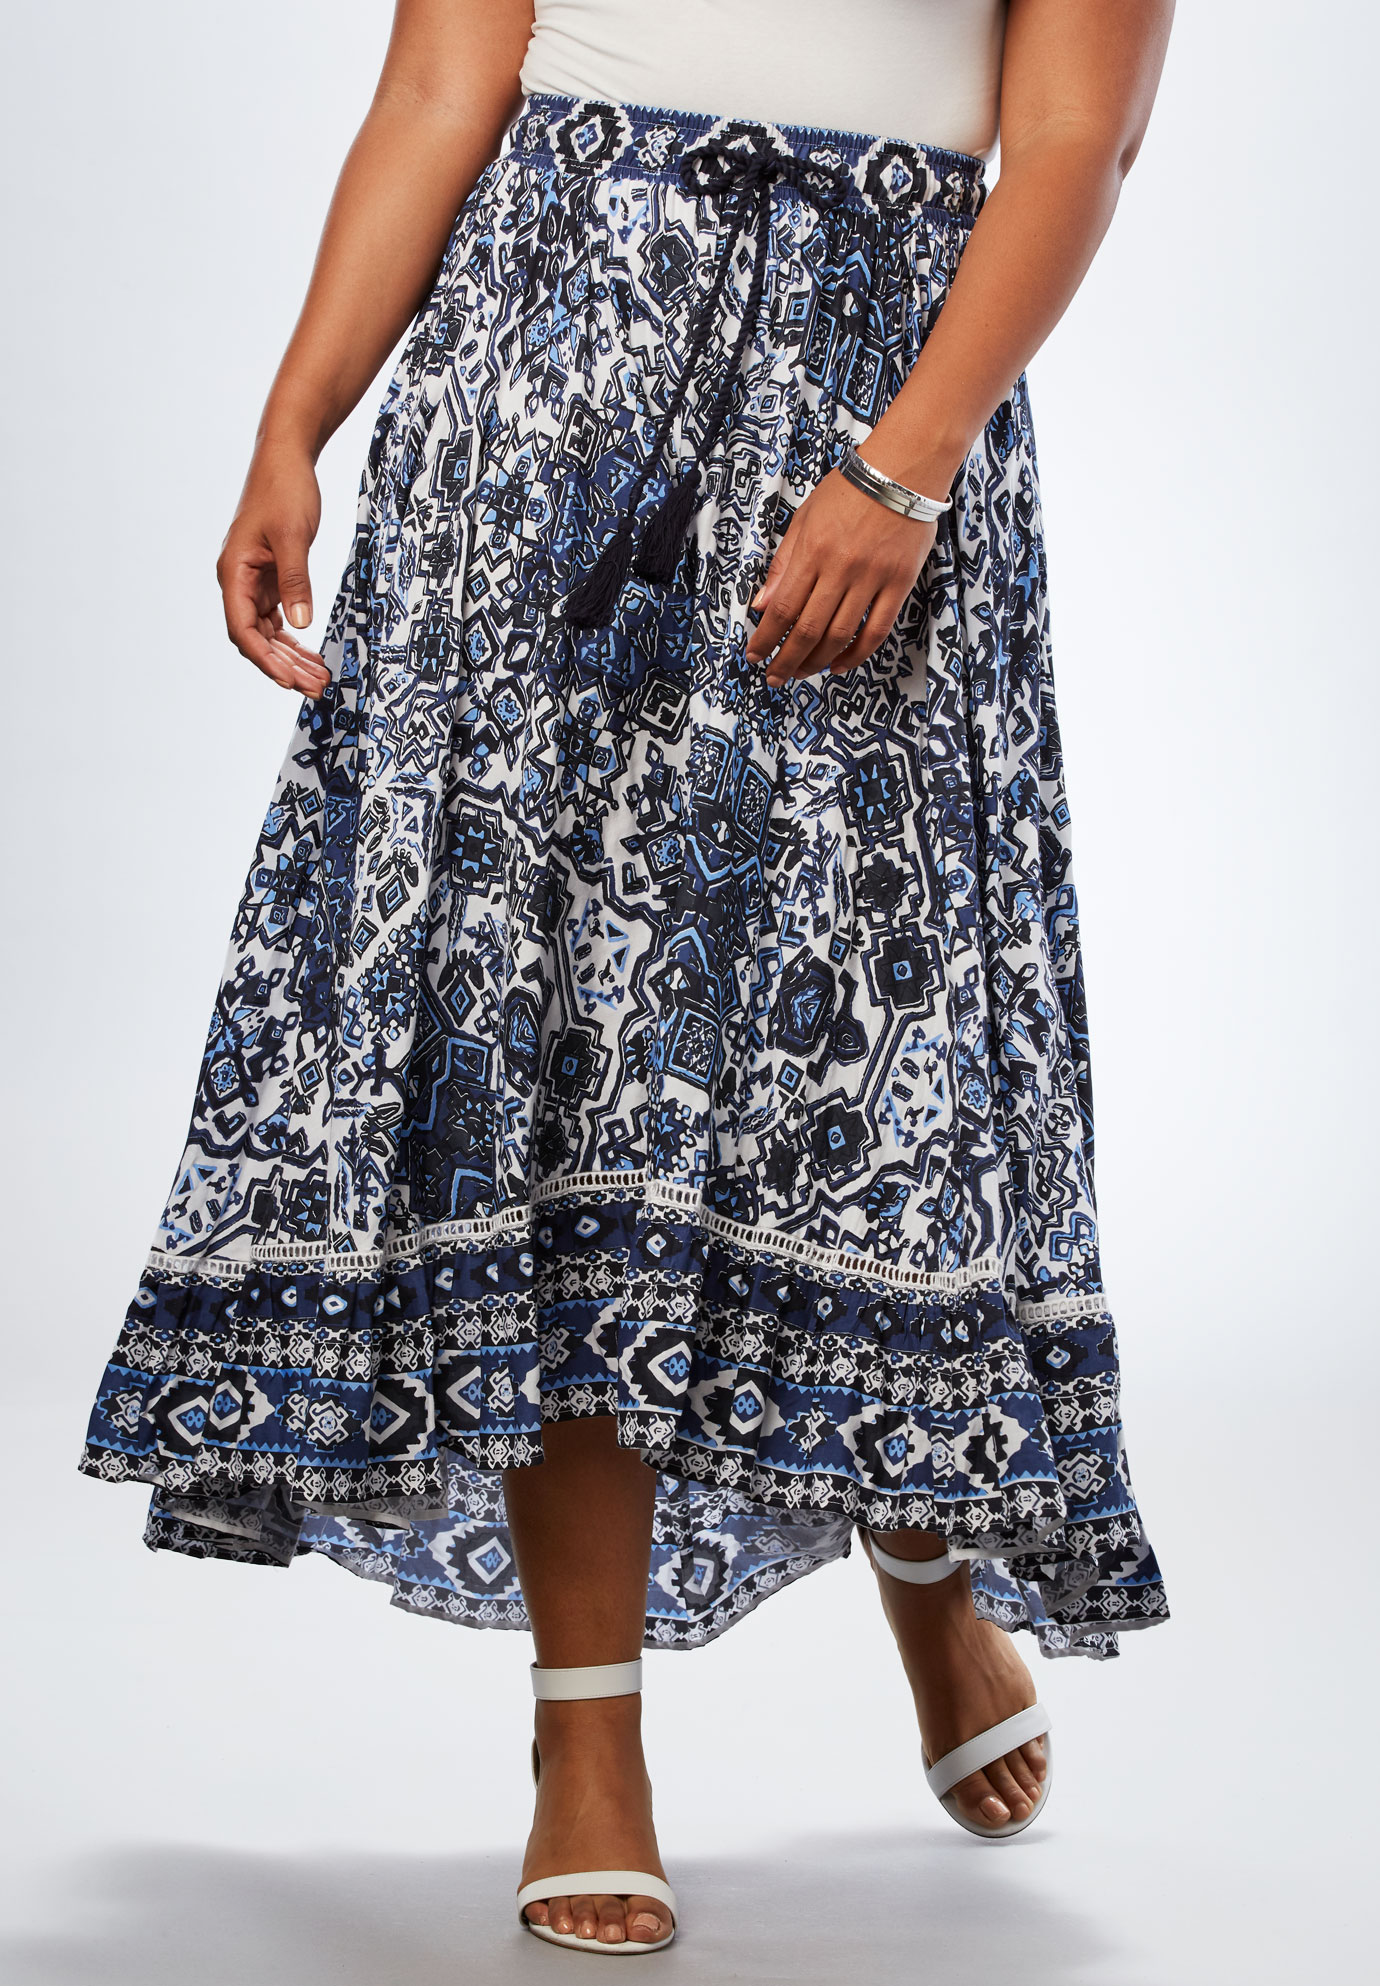 Border Print Skirt With High-Low Hem| Plus Size Skirts | Full Beauty